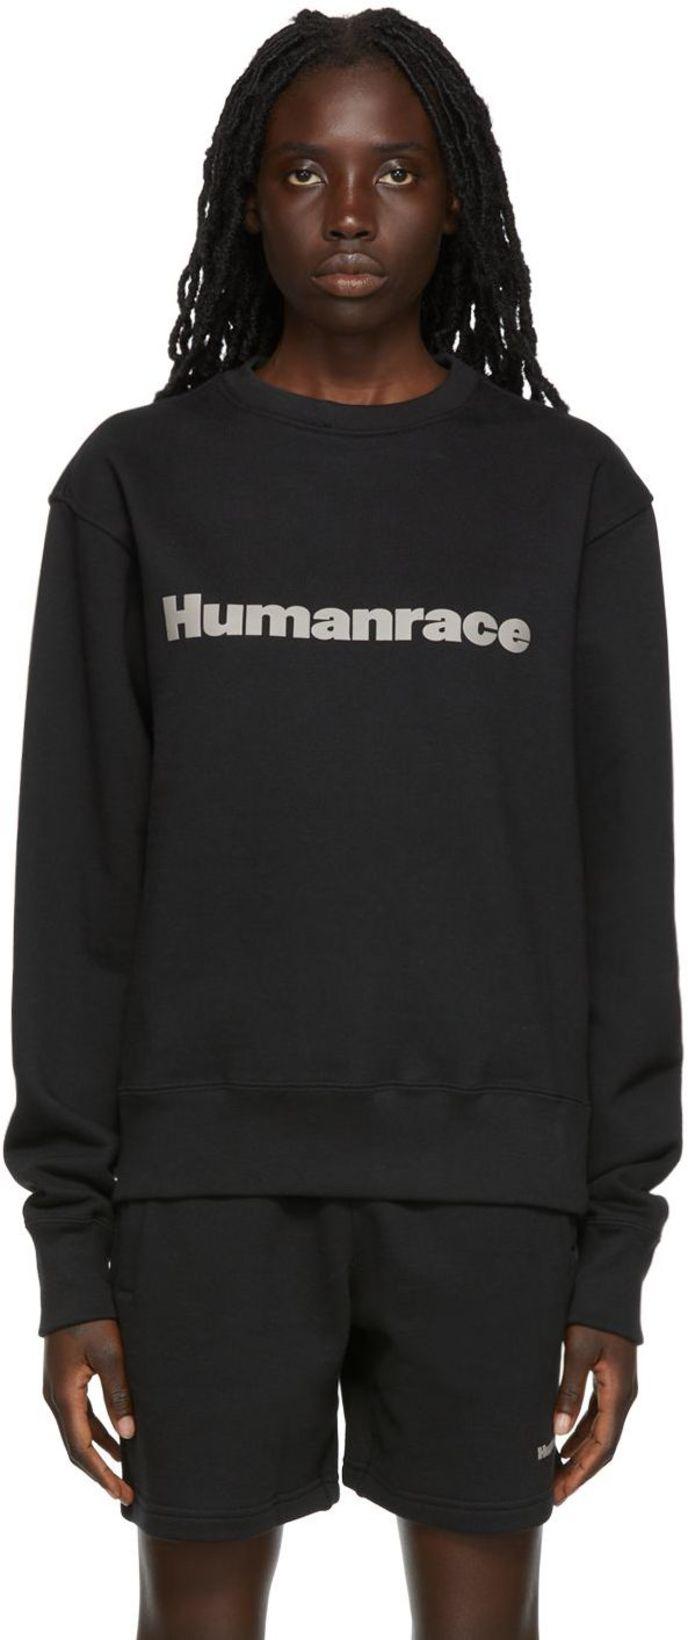 Black Humanrace Basics Sweatshirt by ADIDAS X HUMANRACE BY PHARRELL WILLIAMS